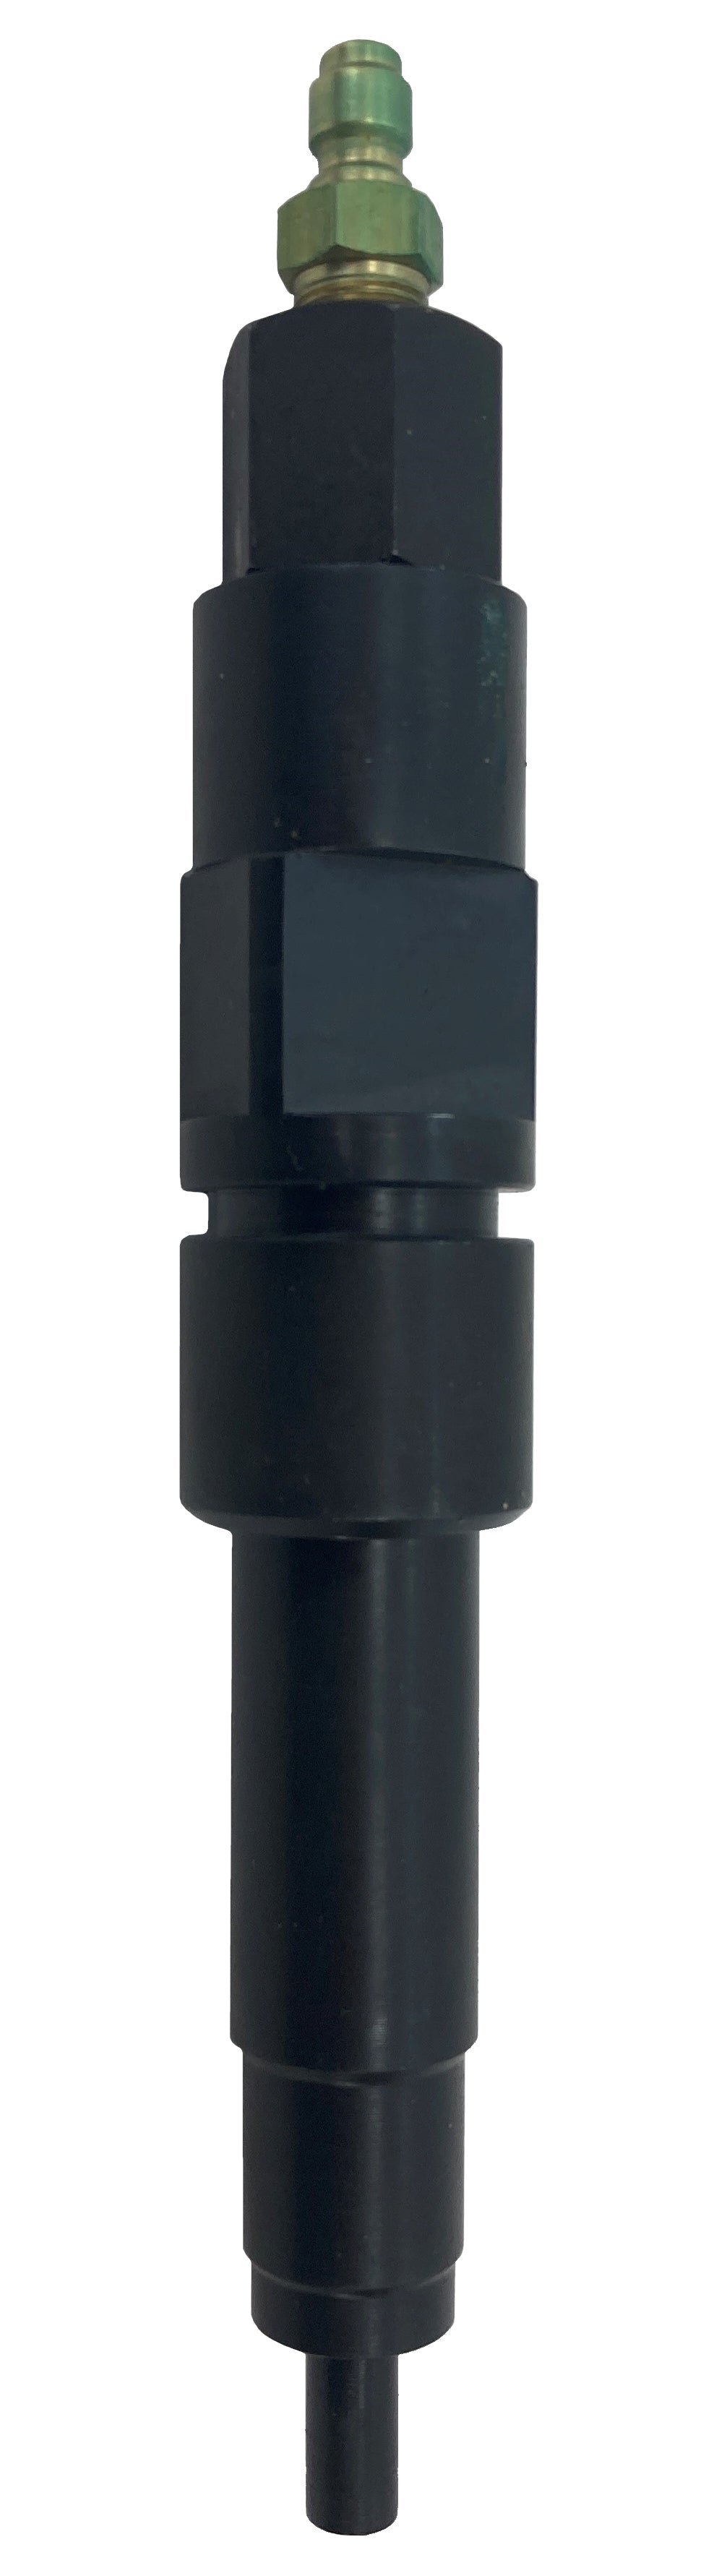 John Deere Servicegard Compression Test Adapter - JDG2047A